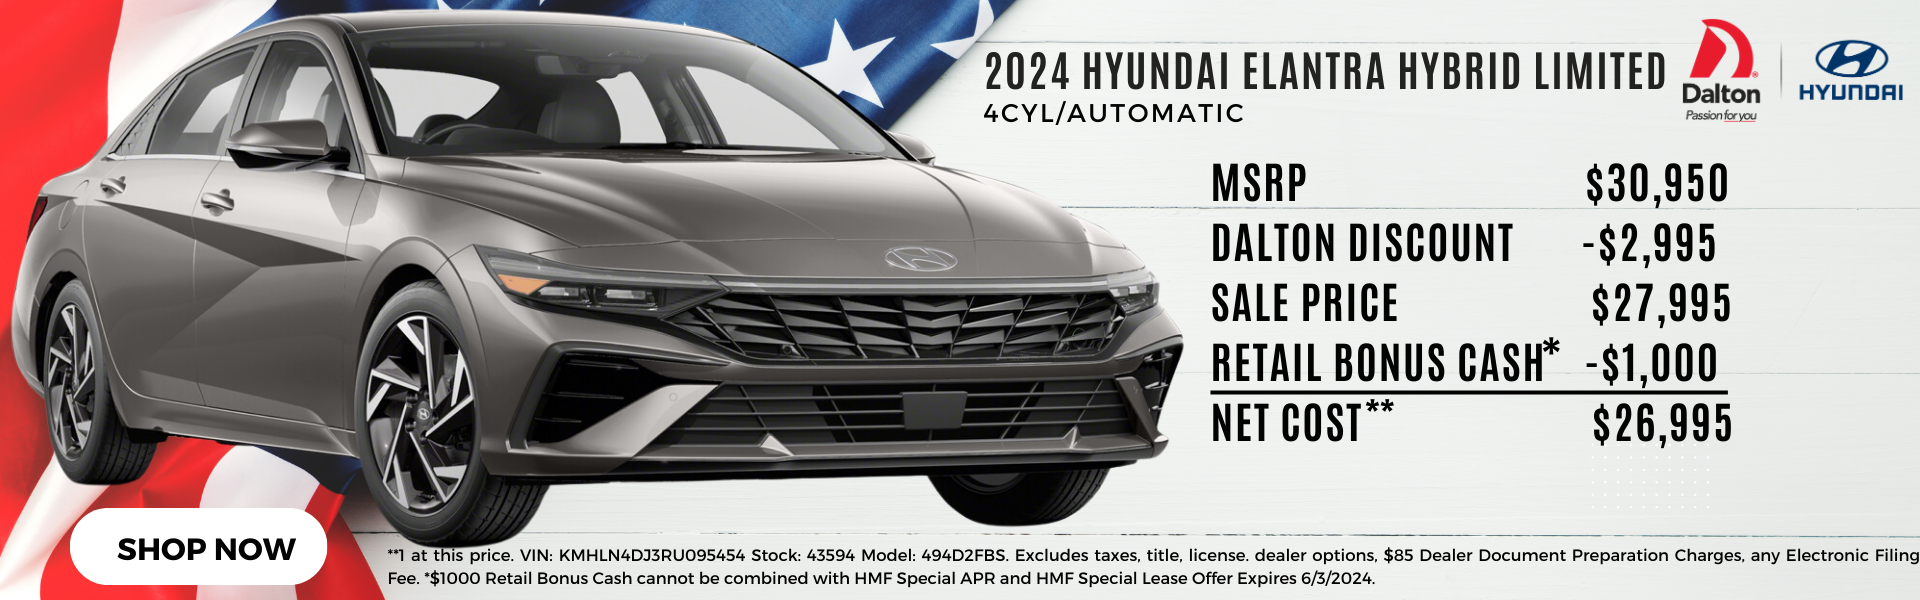 2024 Hyundai elantra limited